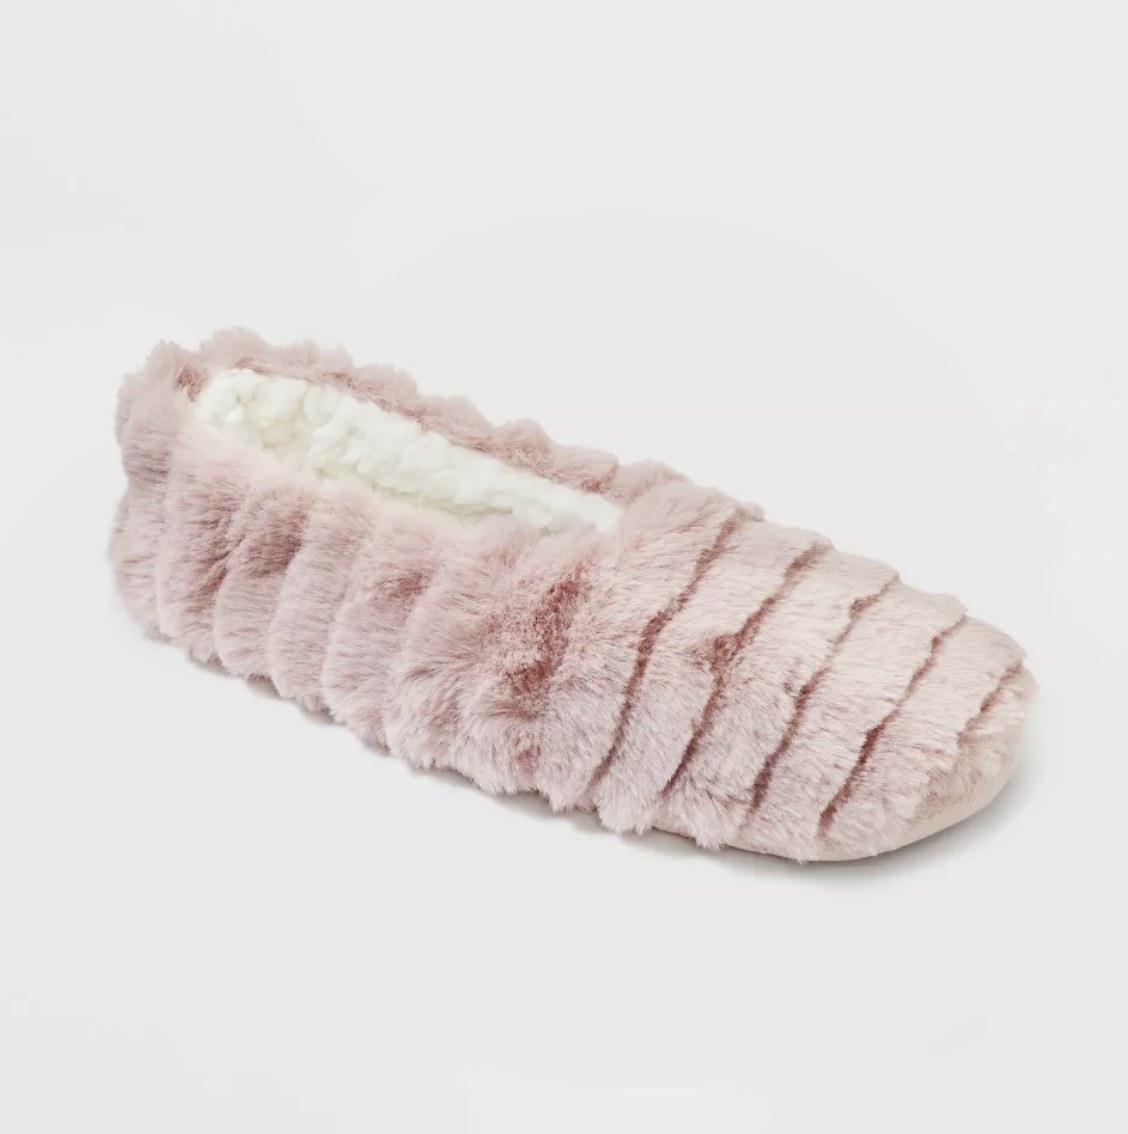 the pink fuzzy slip-on slipper socks